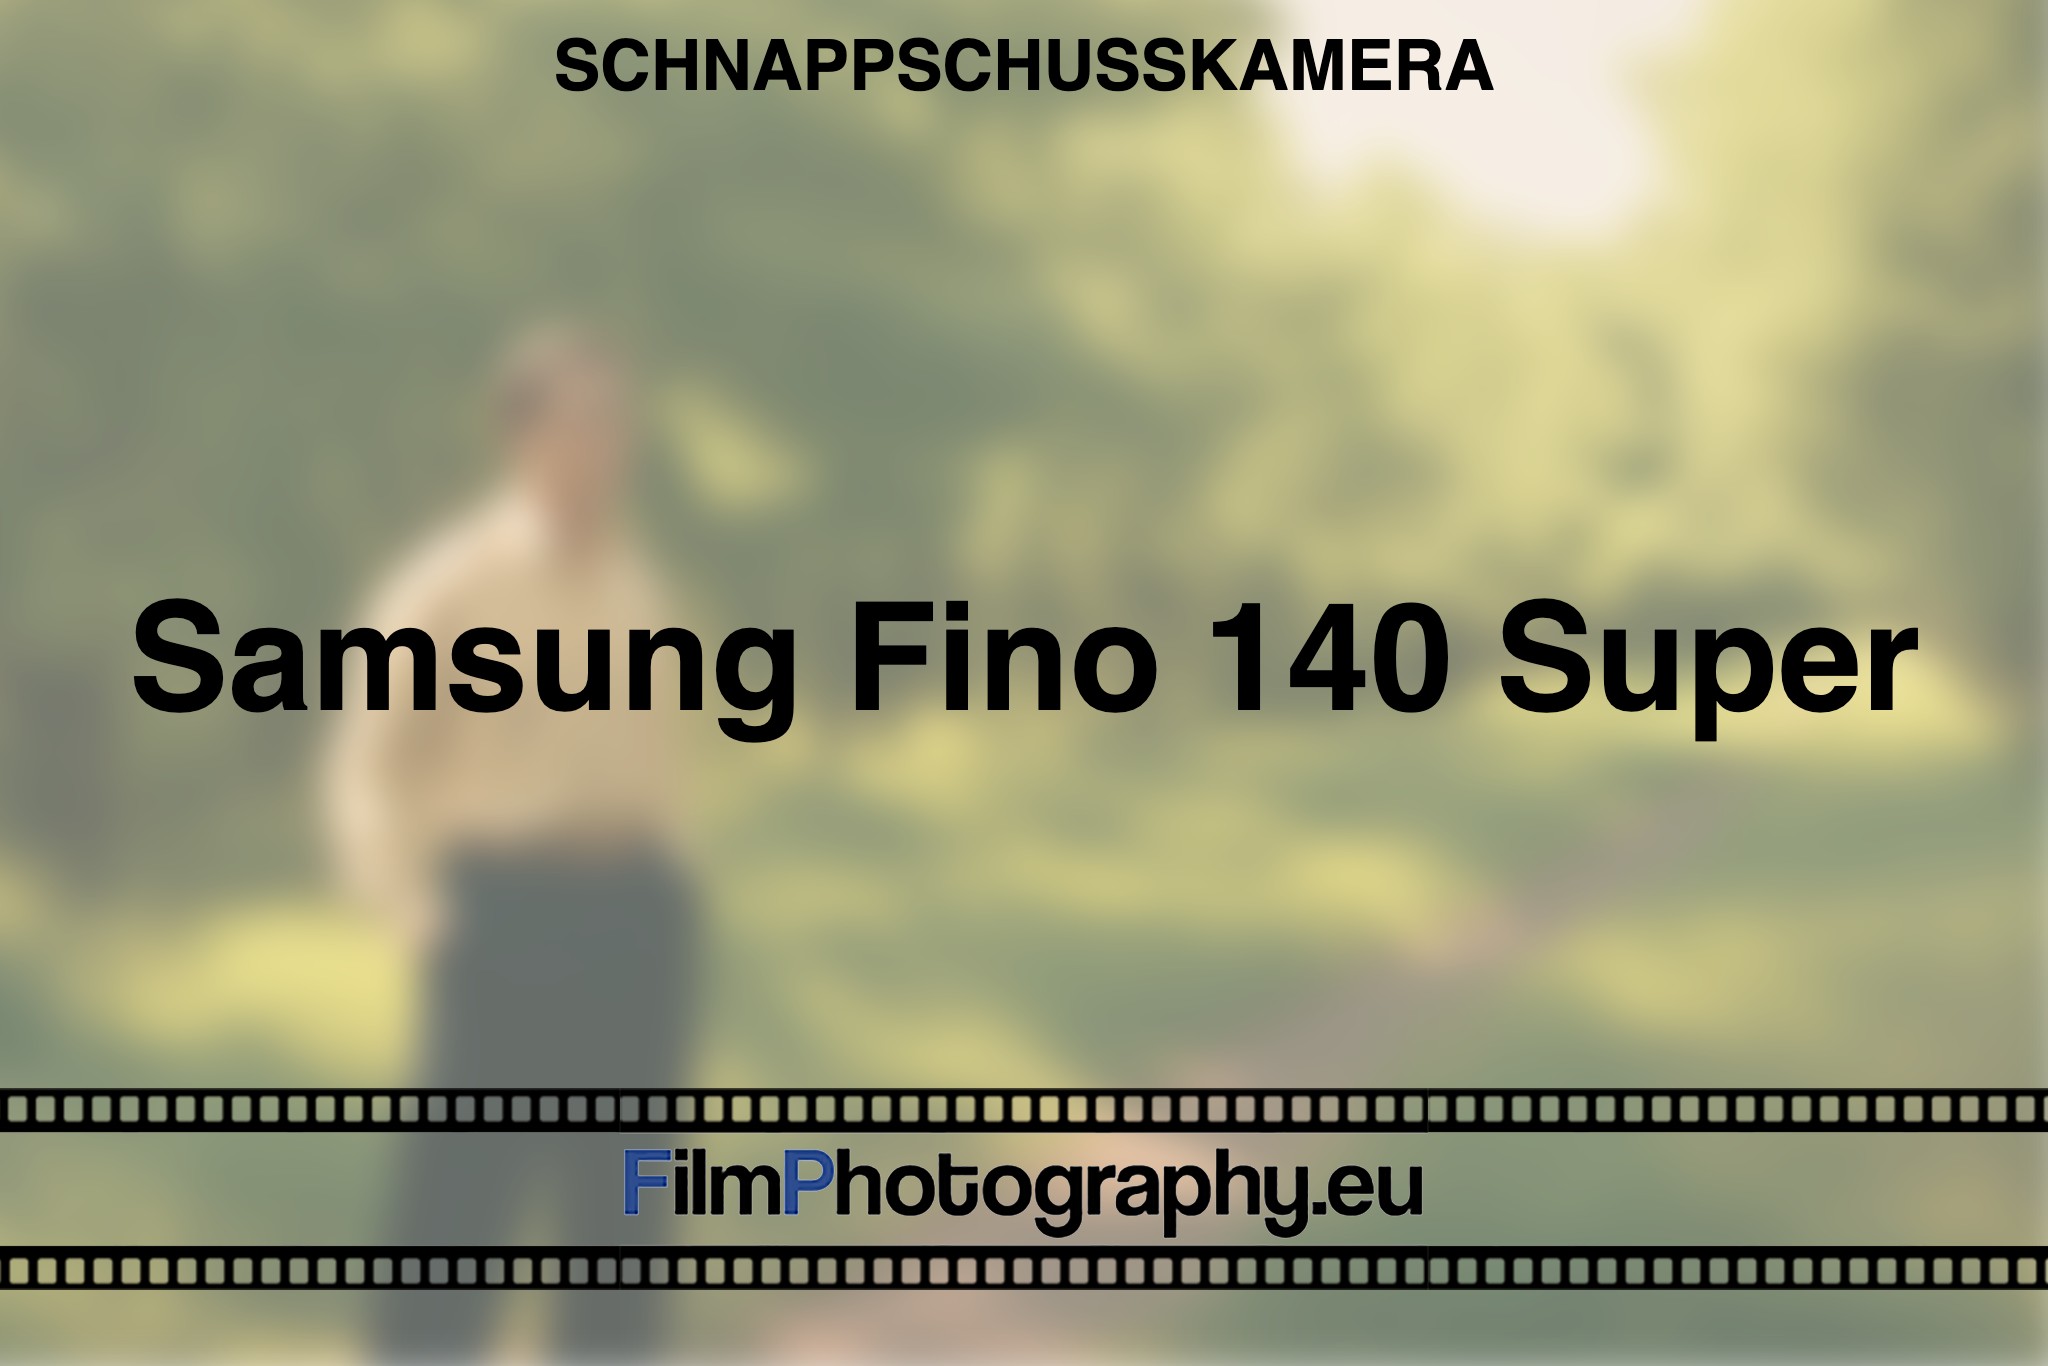 samsung-fino-140-super-schnappschusskamera-bnv